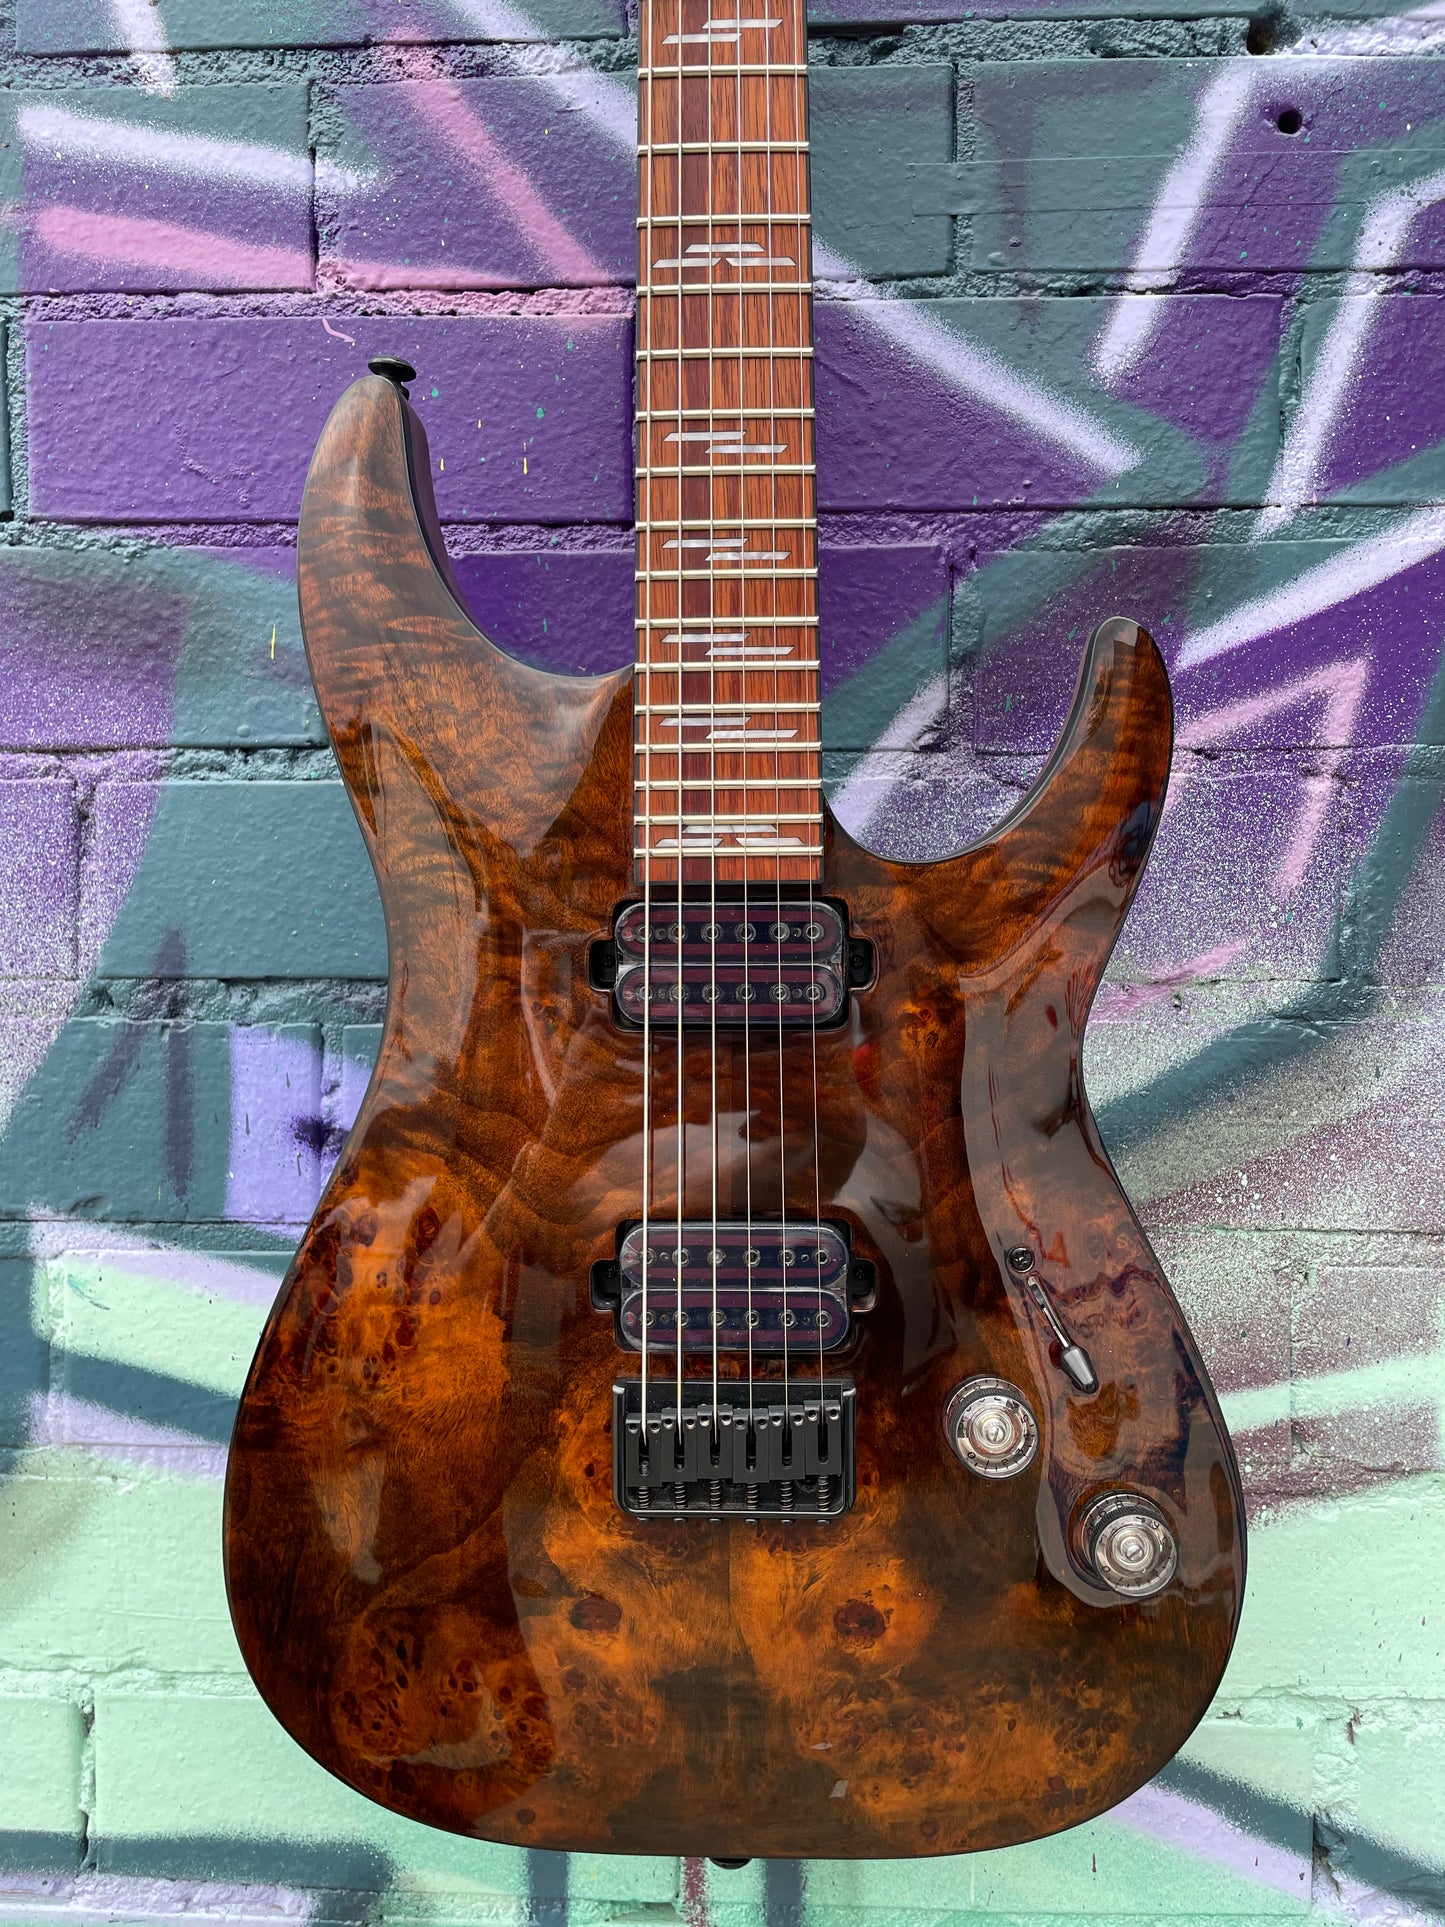 Schecter Omen Elite-6 Electric Guitar - Charcoal